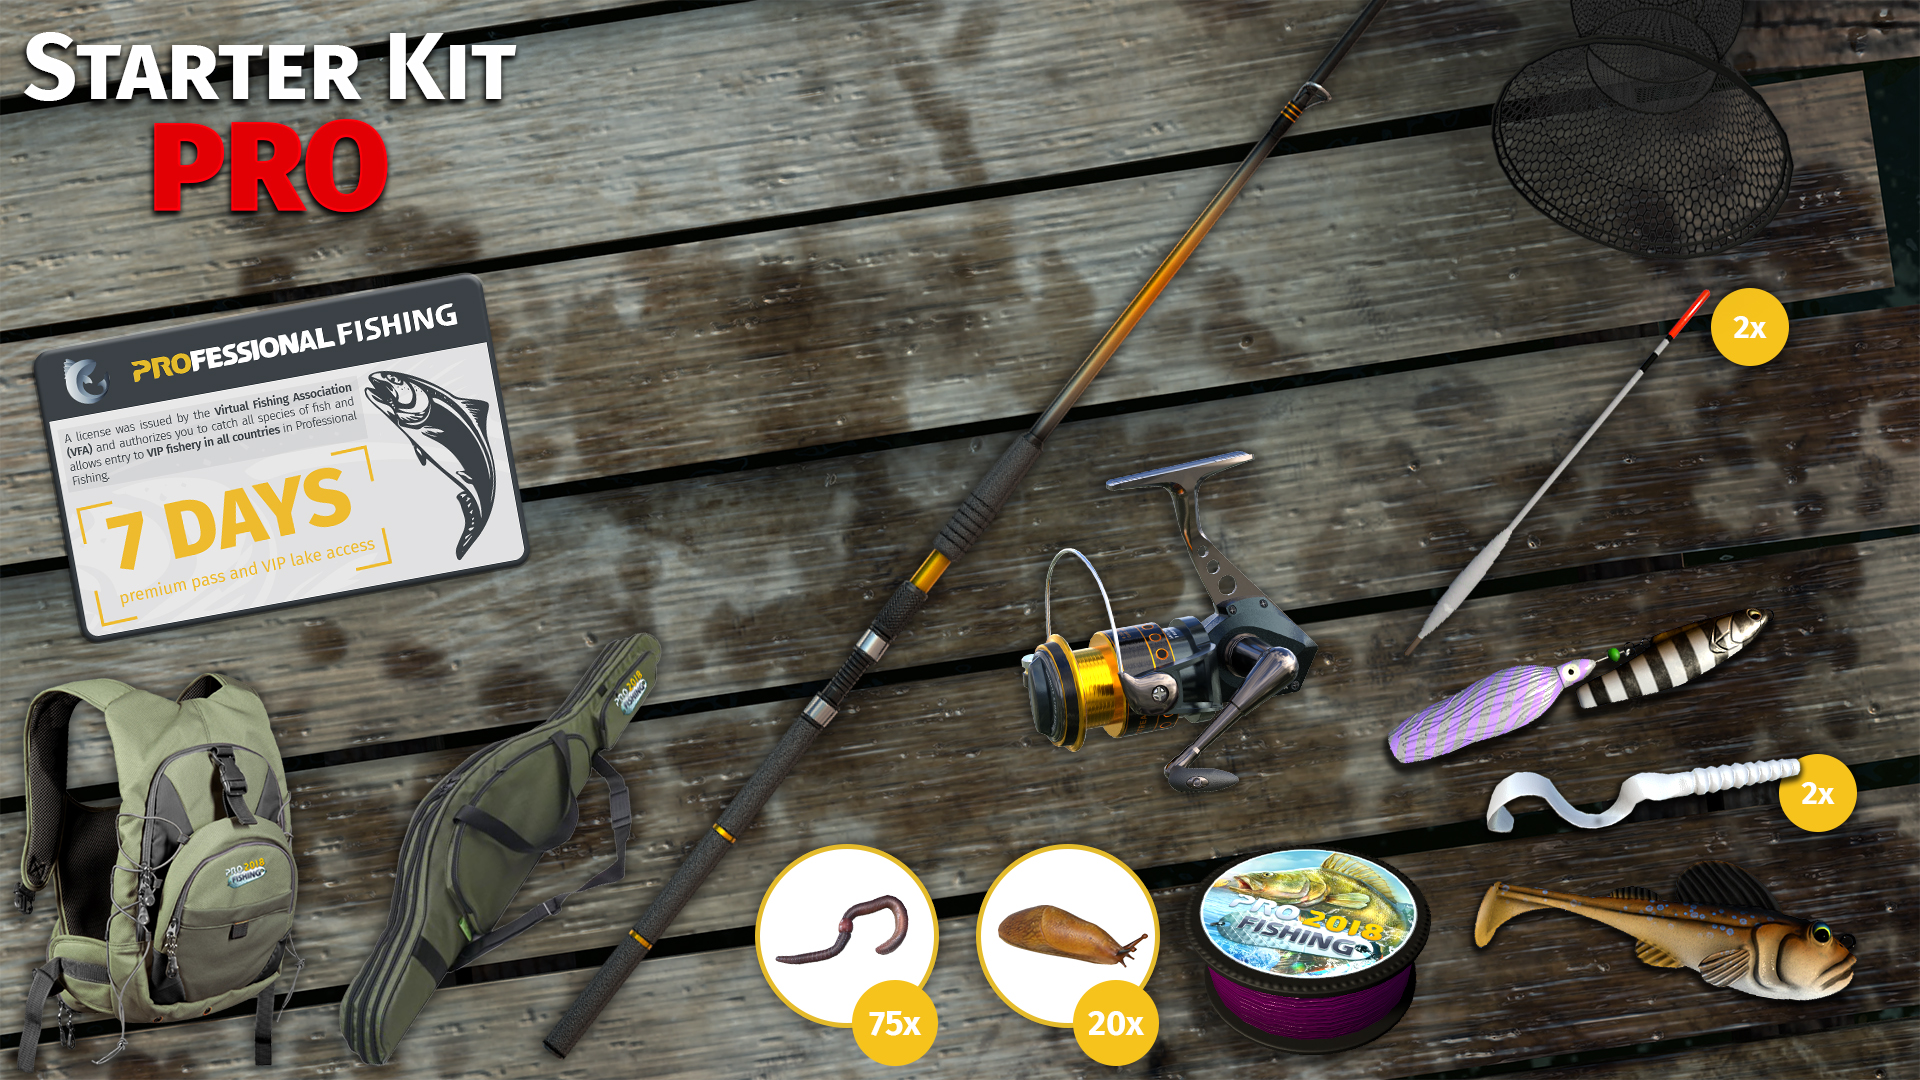 Professional Fishing: Starter Kit Pro on Steam